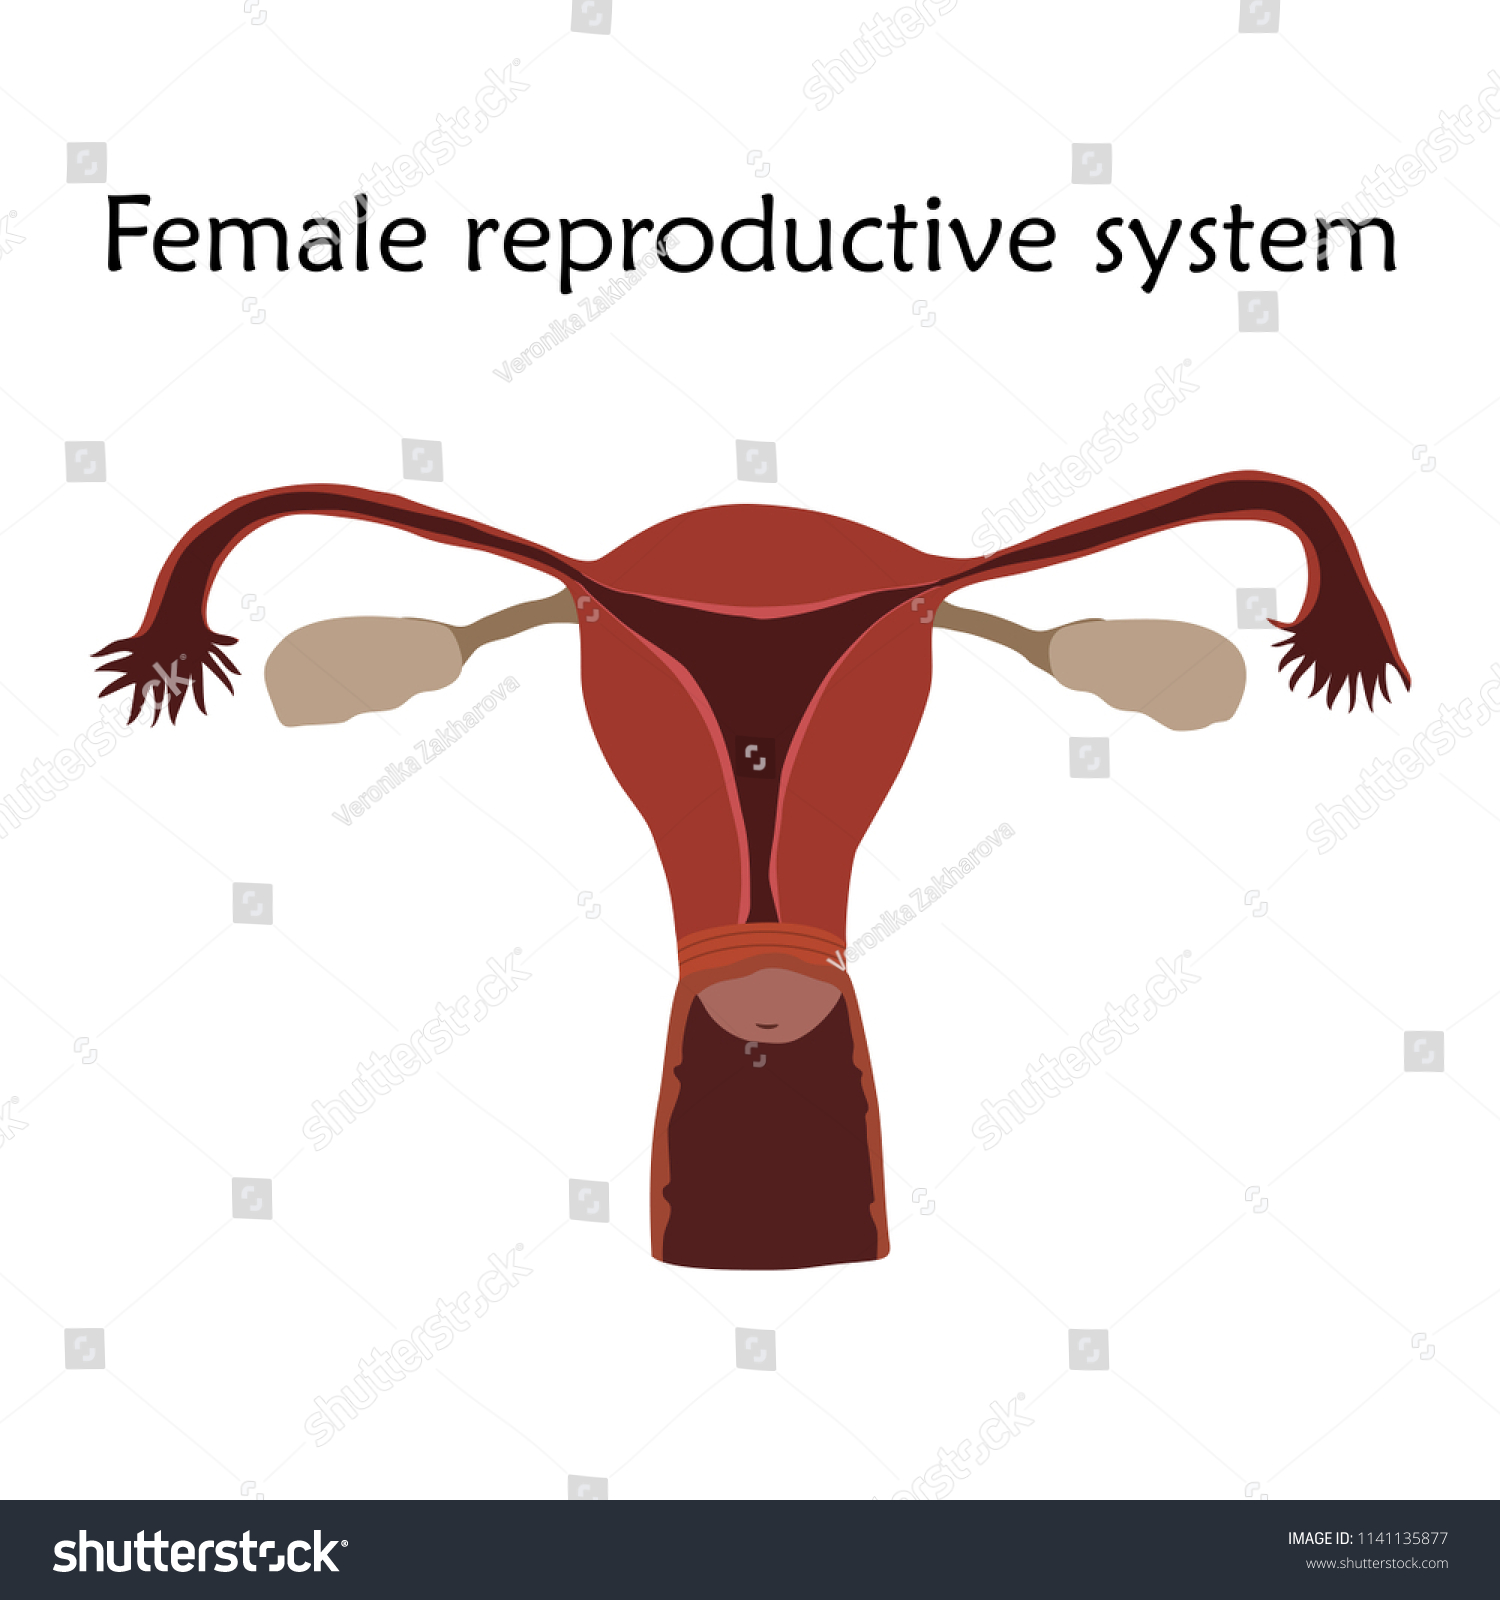 Human Female Reproductive Anatomy 3907